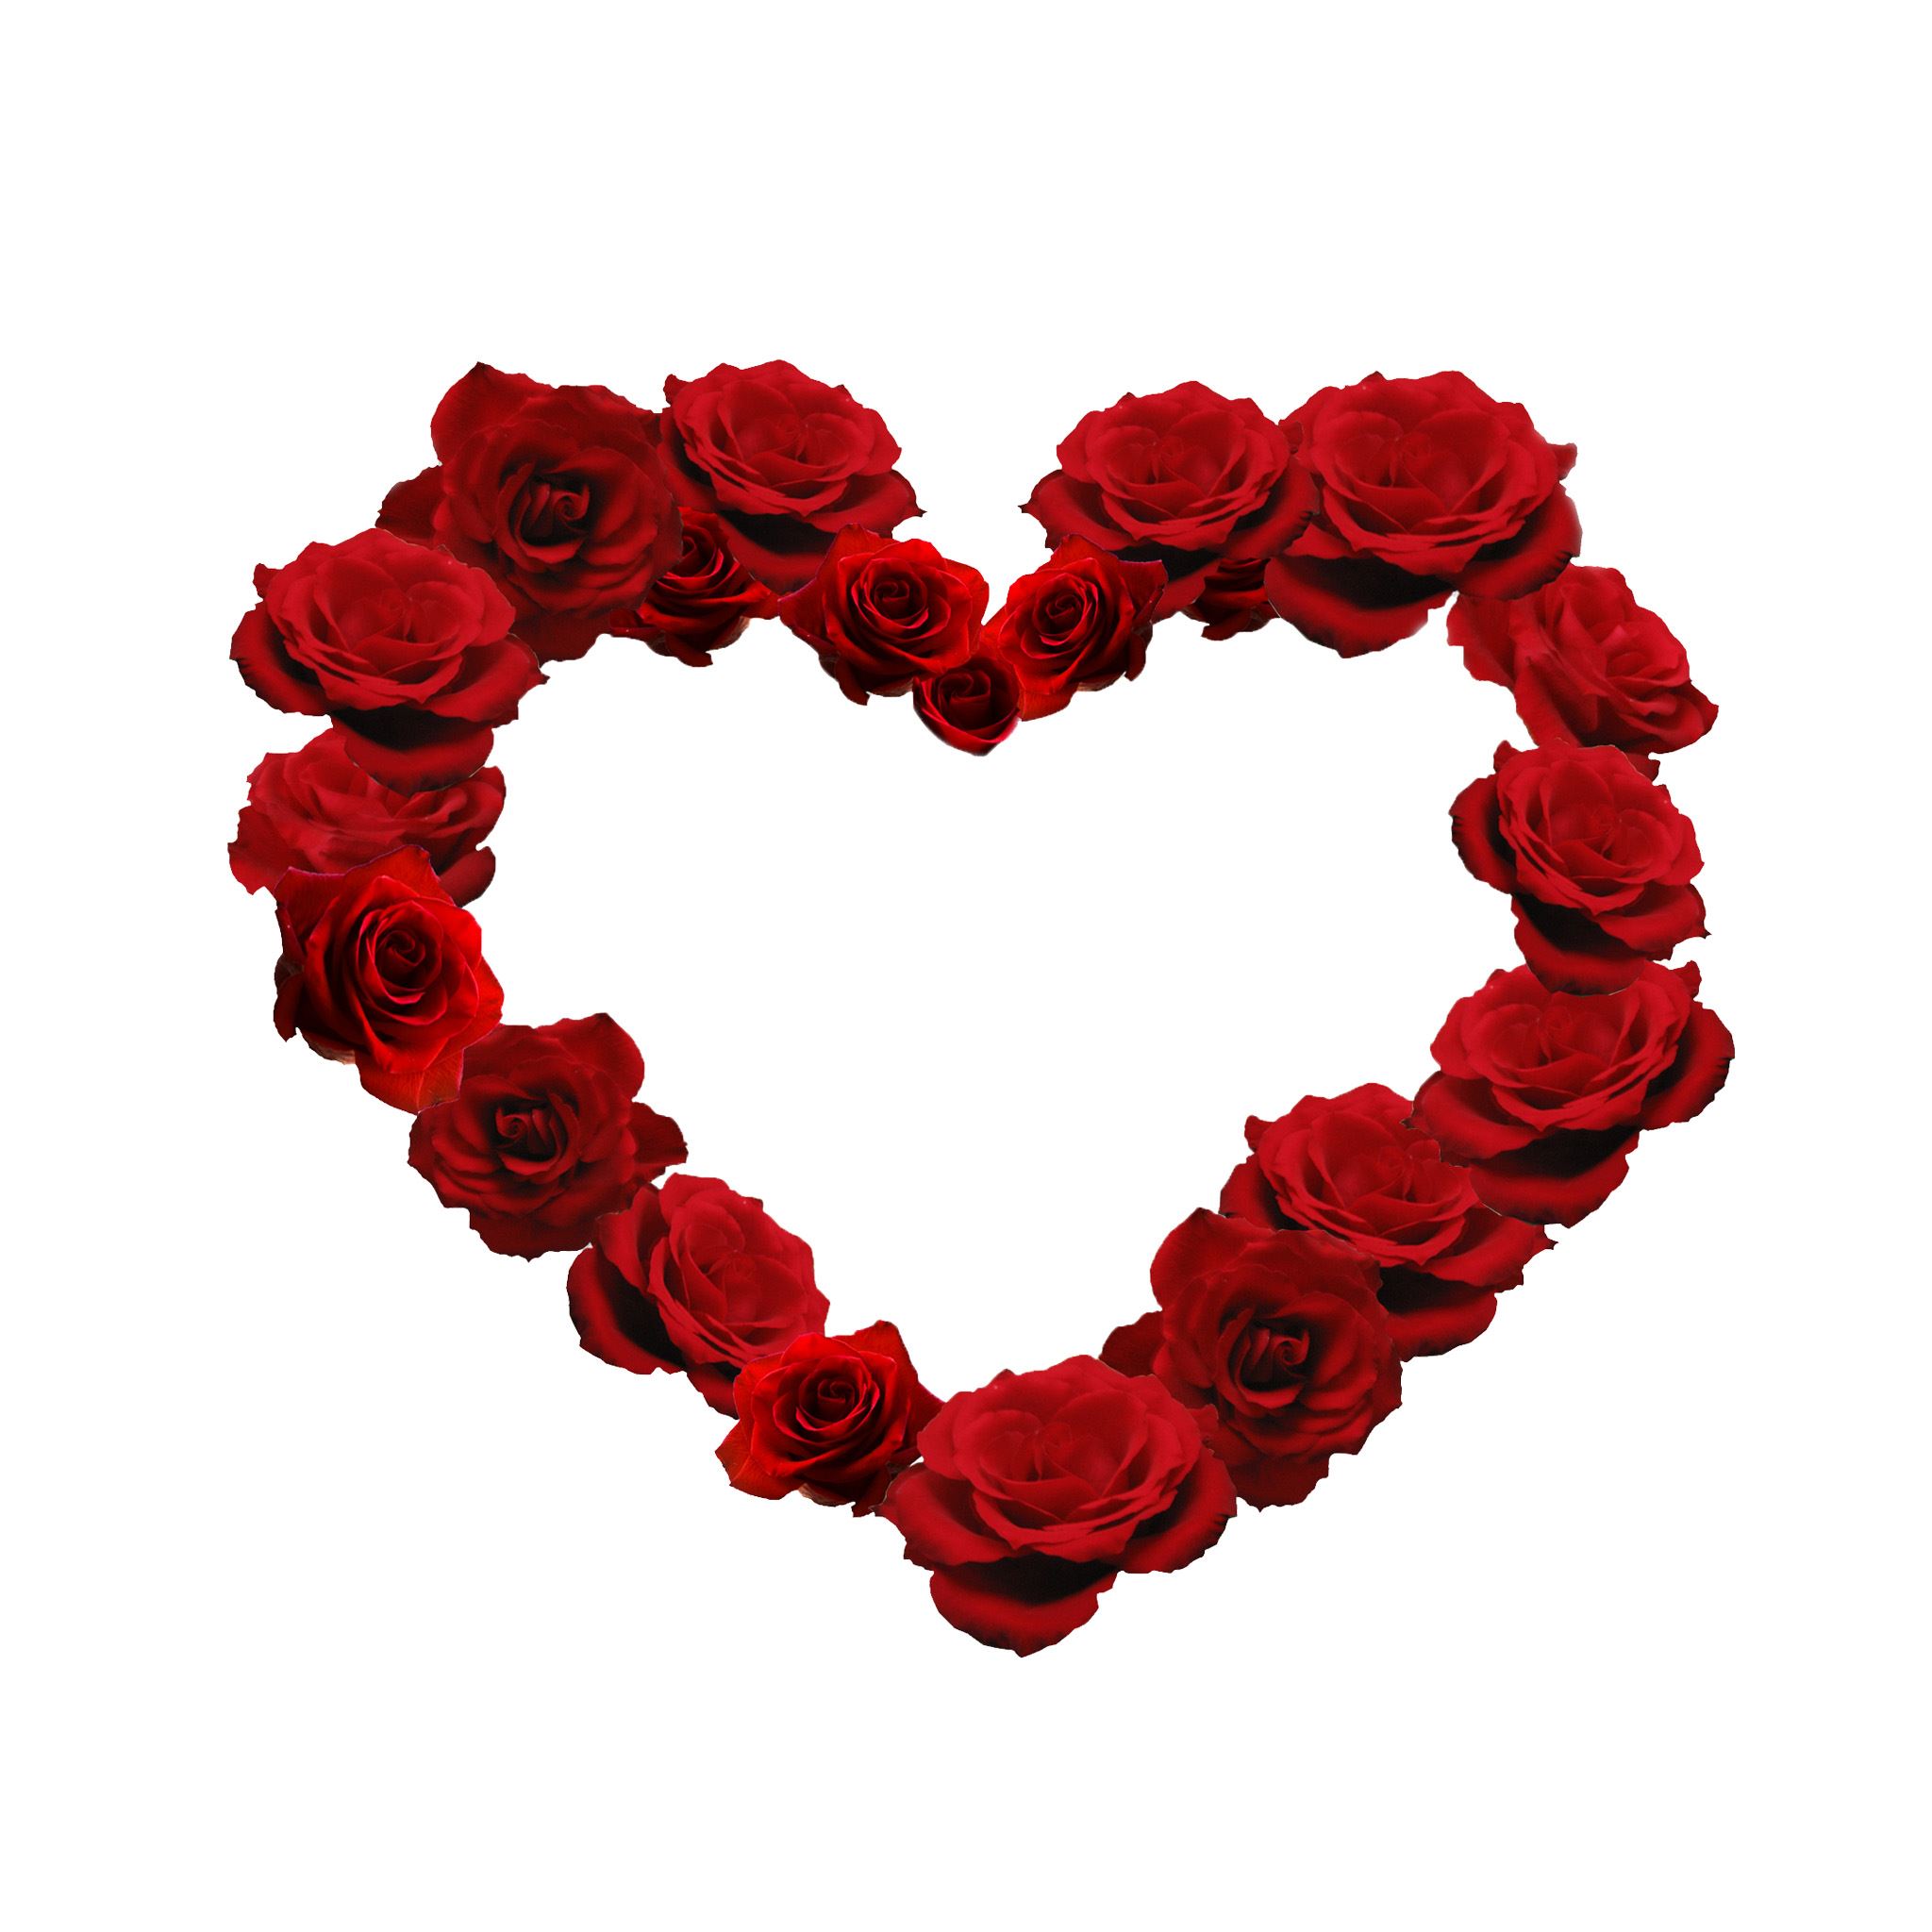 Rose Love Heart iPad Air wallpaper 